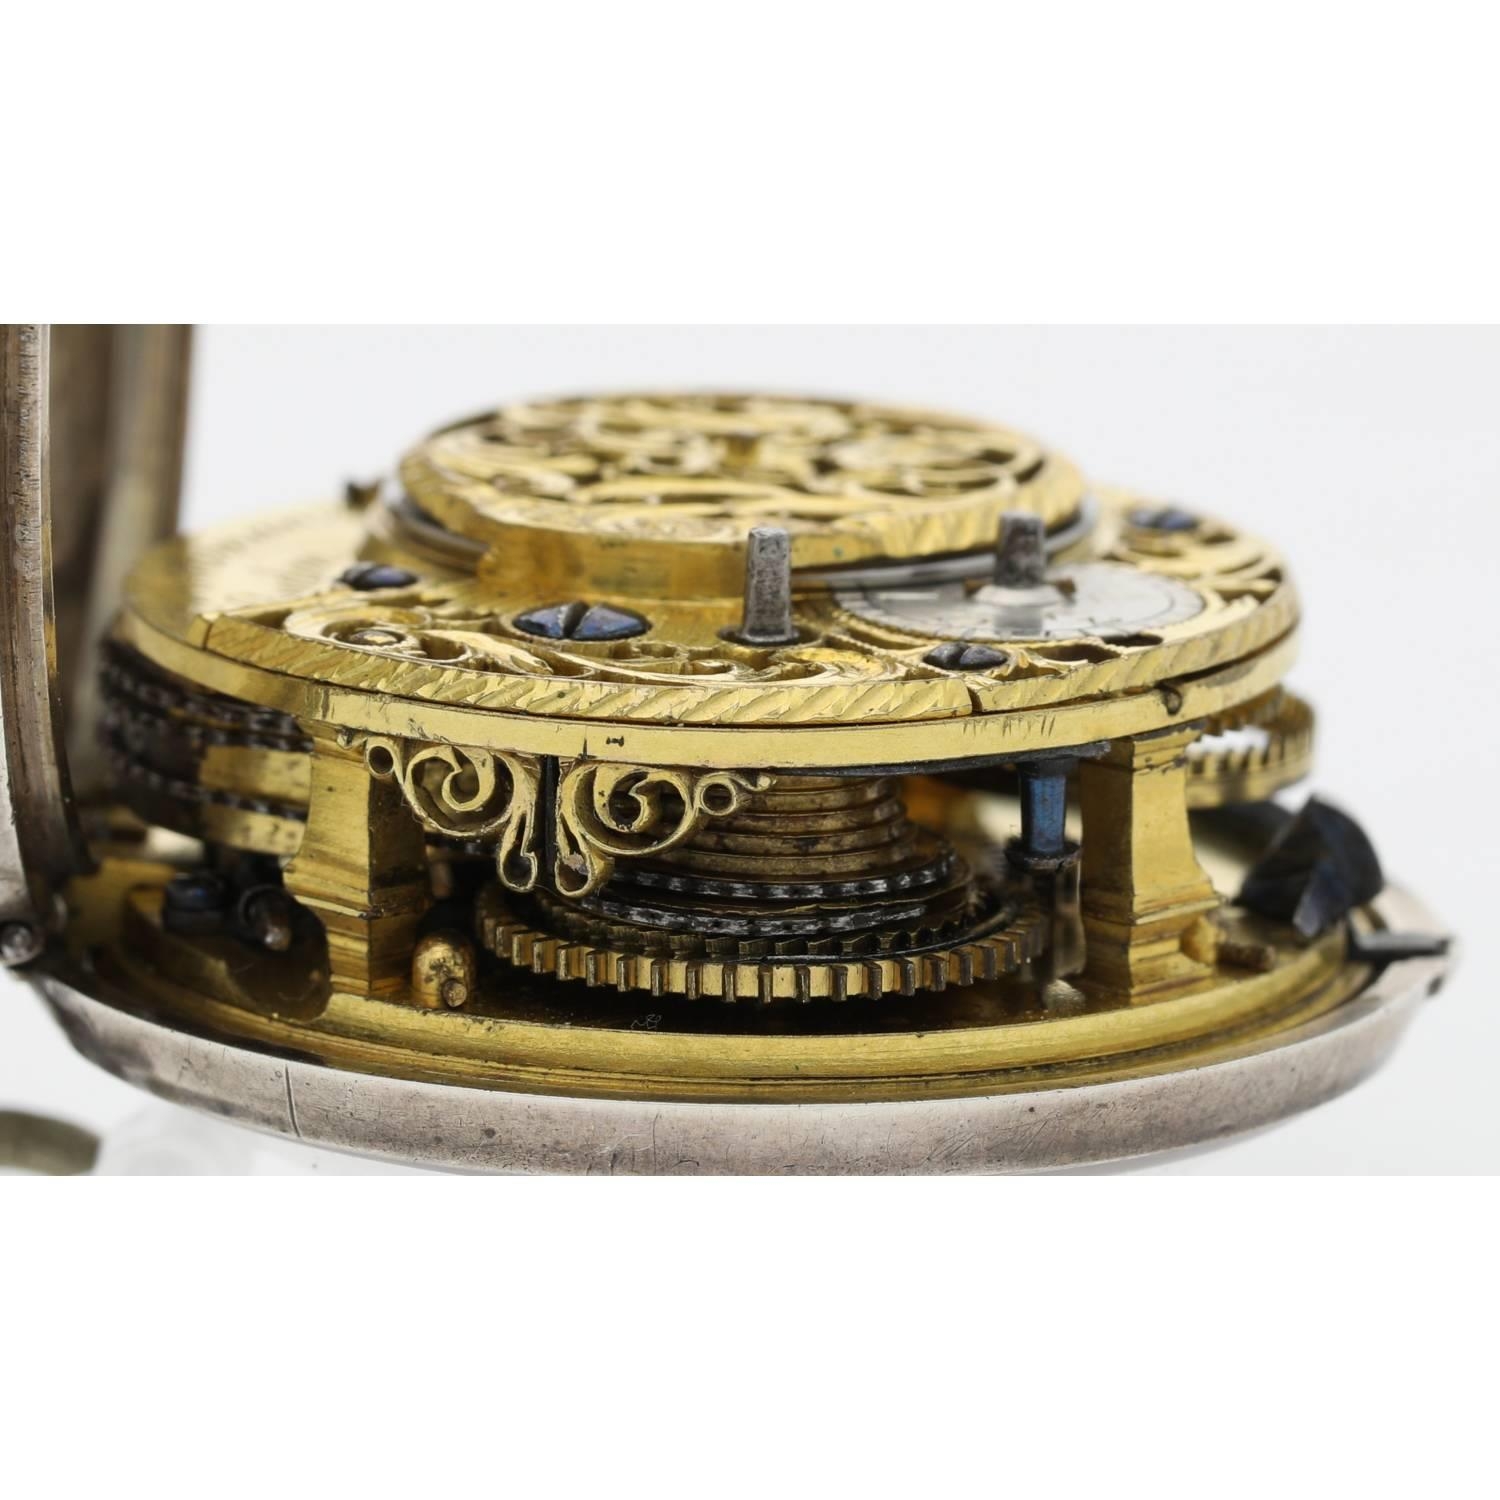 Jno Woodman, London - George III English silver pair cased verge pocket watch, London 1771, signed - Image 6 of 10